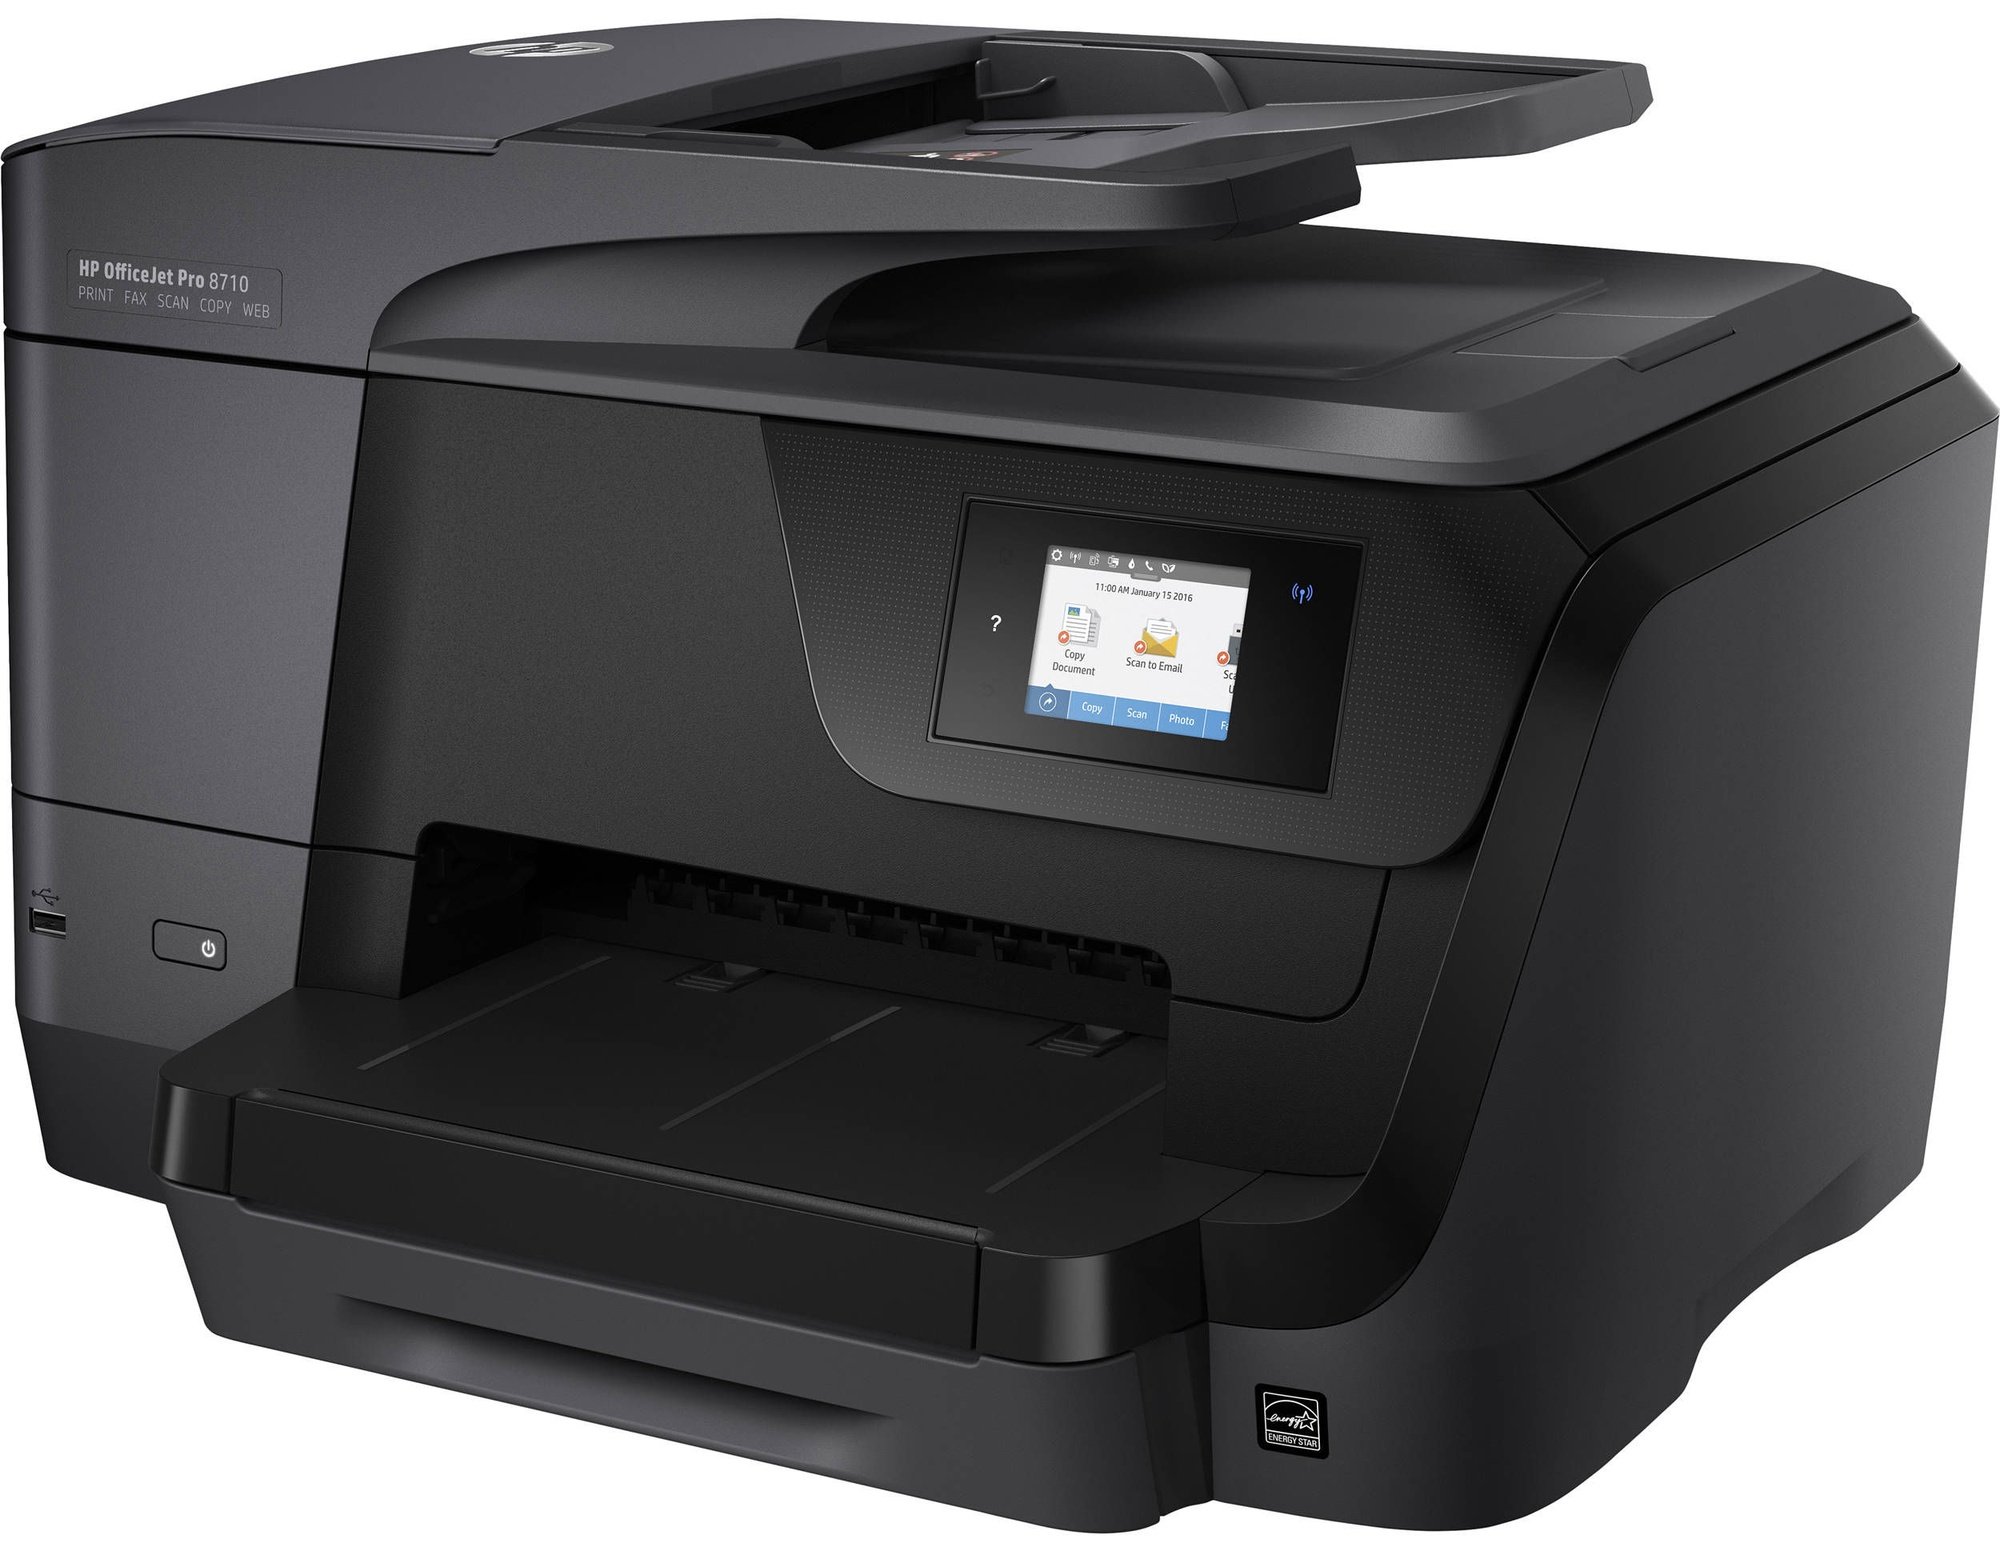 printer hp officejet pro 8710 install